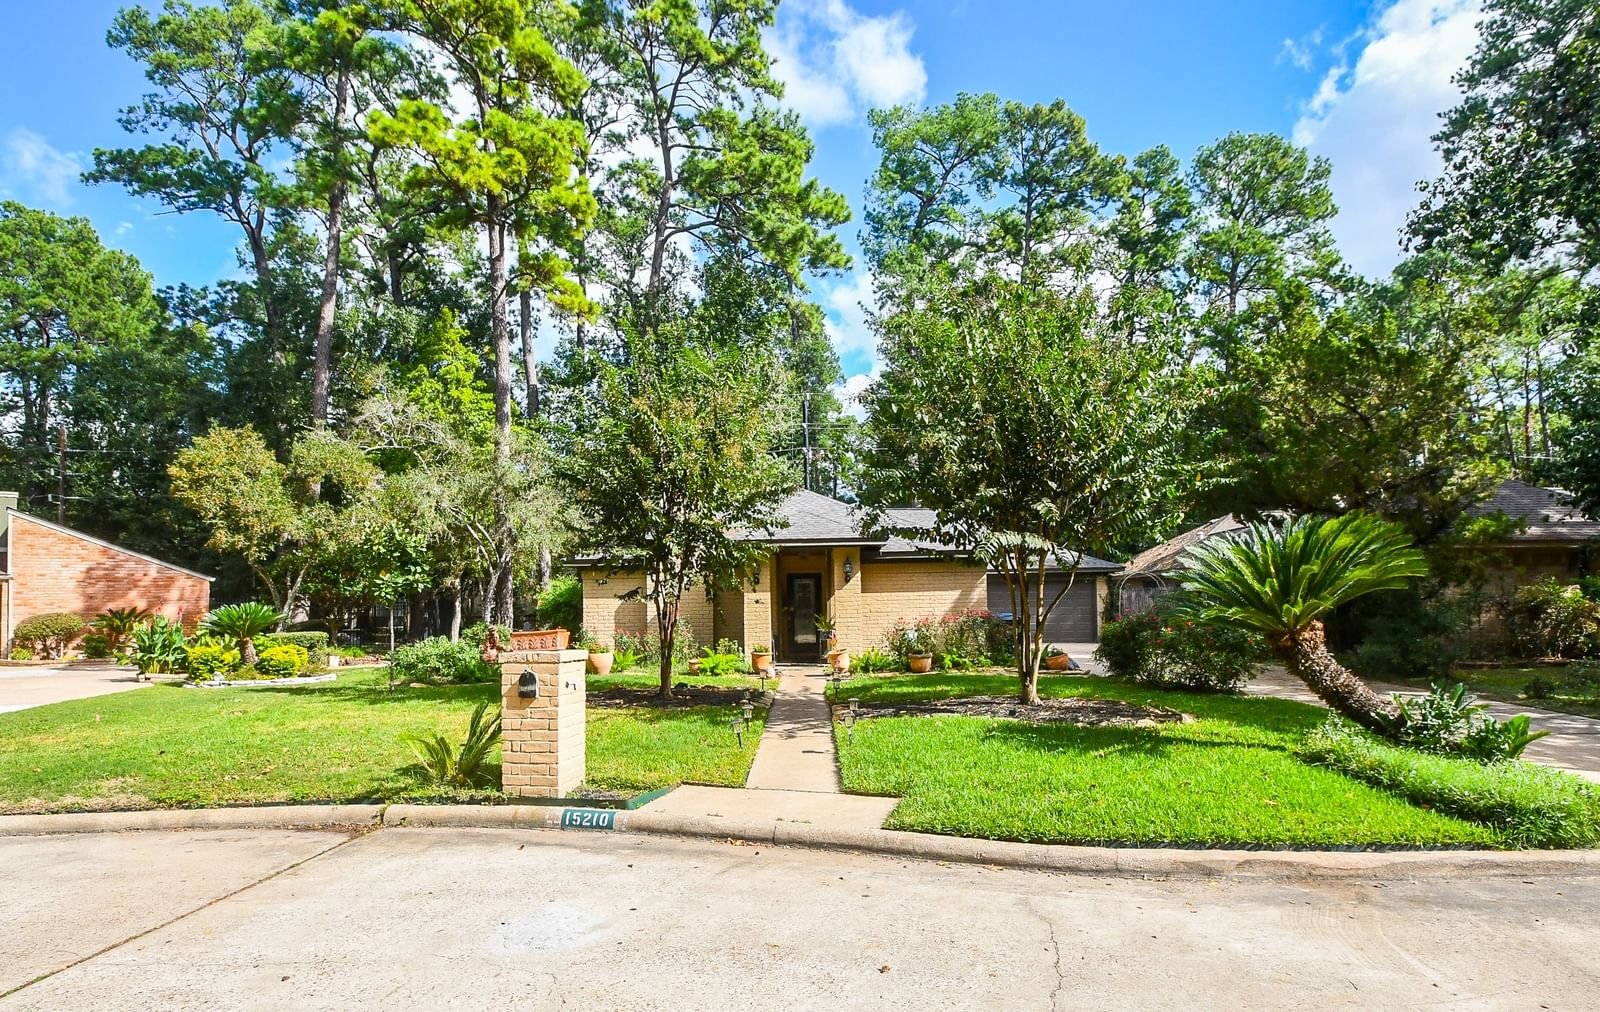 Real estate property located at 15210 Carols Way, Harris, Hunterwood Forest, Houston, TX, US